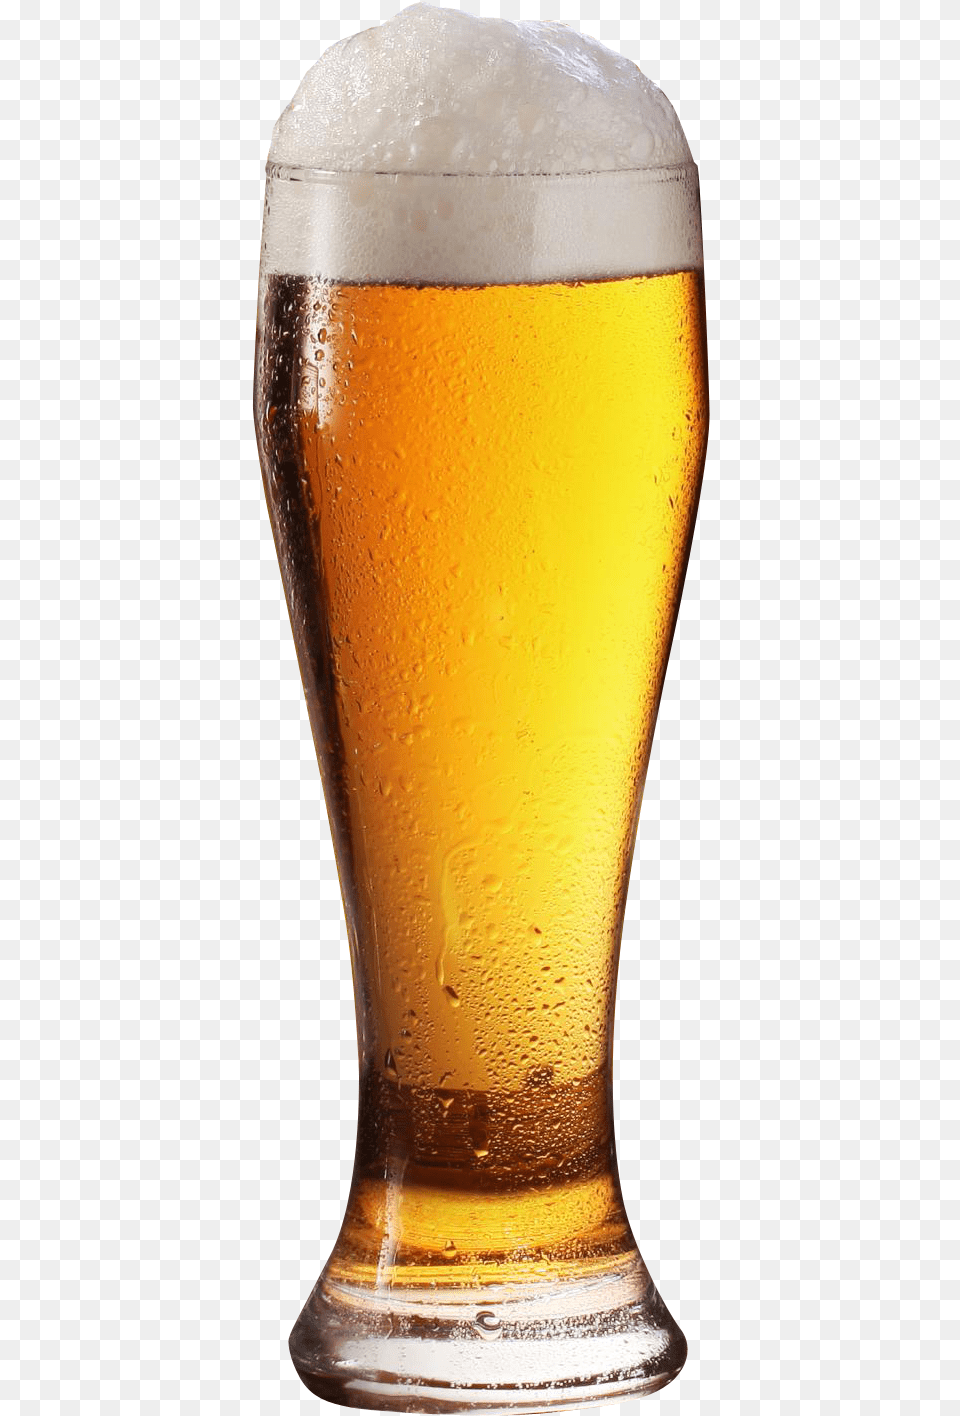 Beer Glass Image Beer Glass, Alcohol, Beer Glass, Beverage, Lager Free Transparent Png